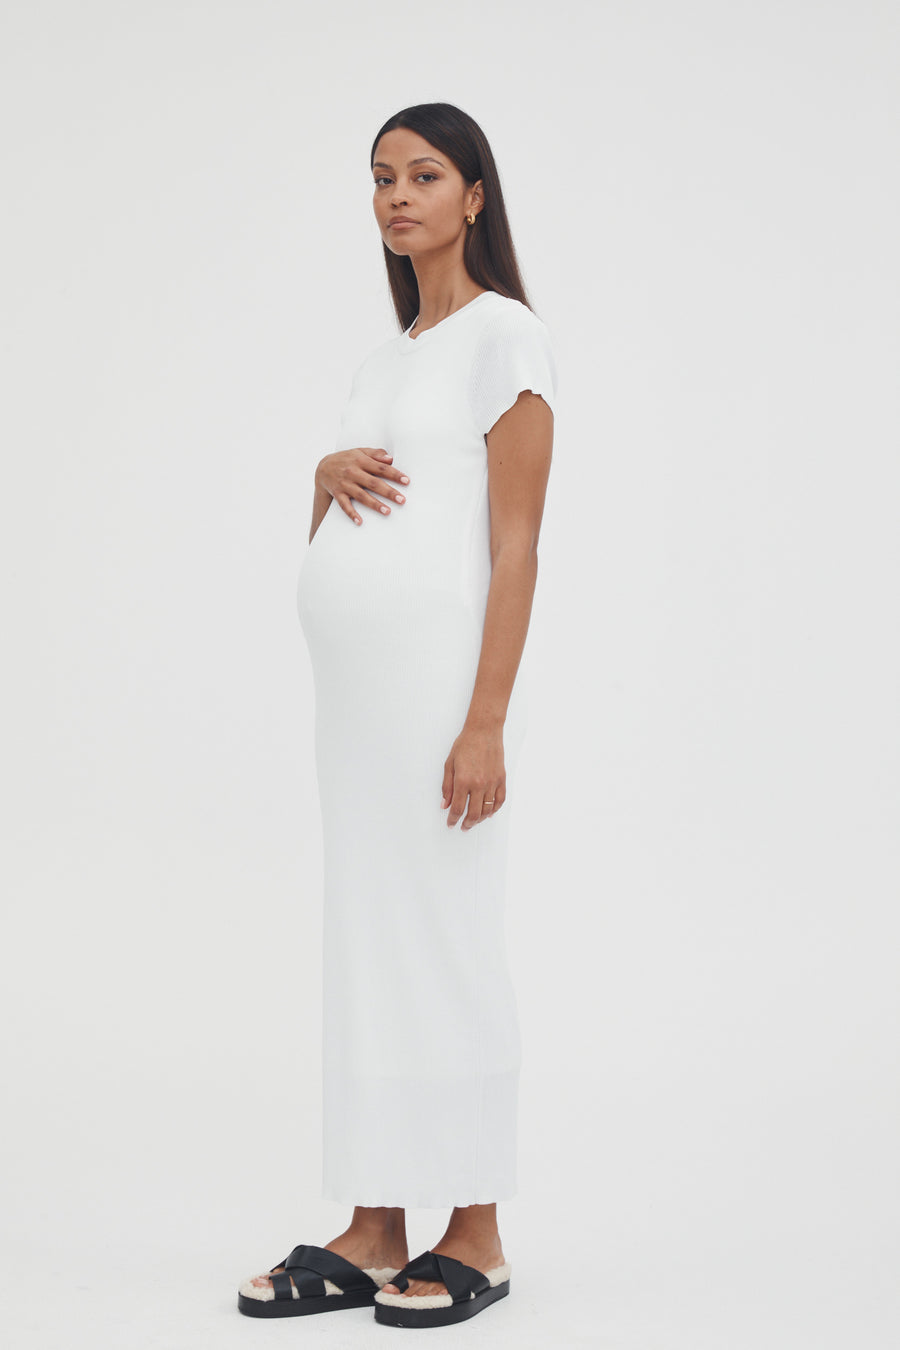 Stylish Babyshower Dress (White) 7